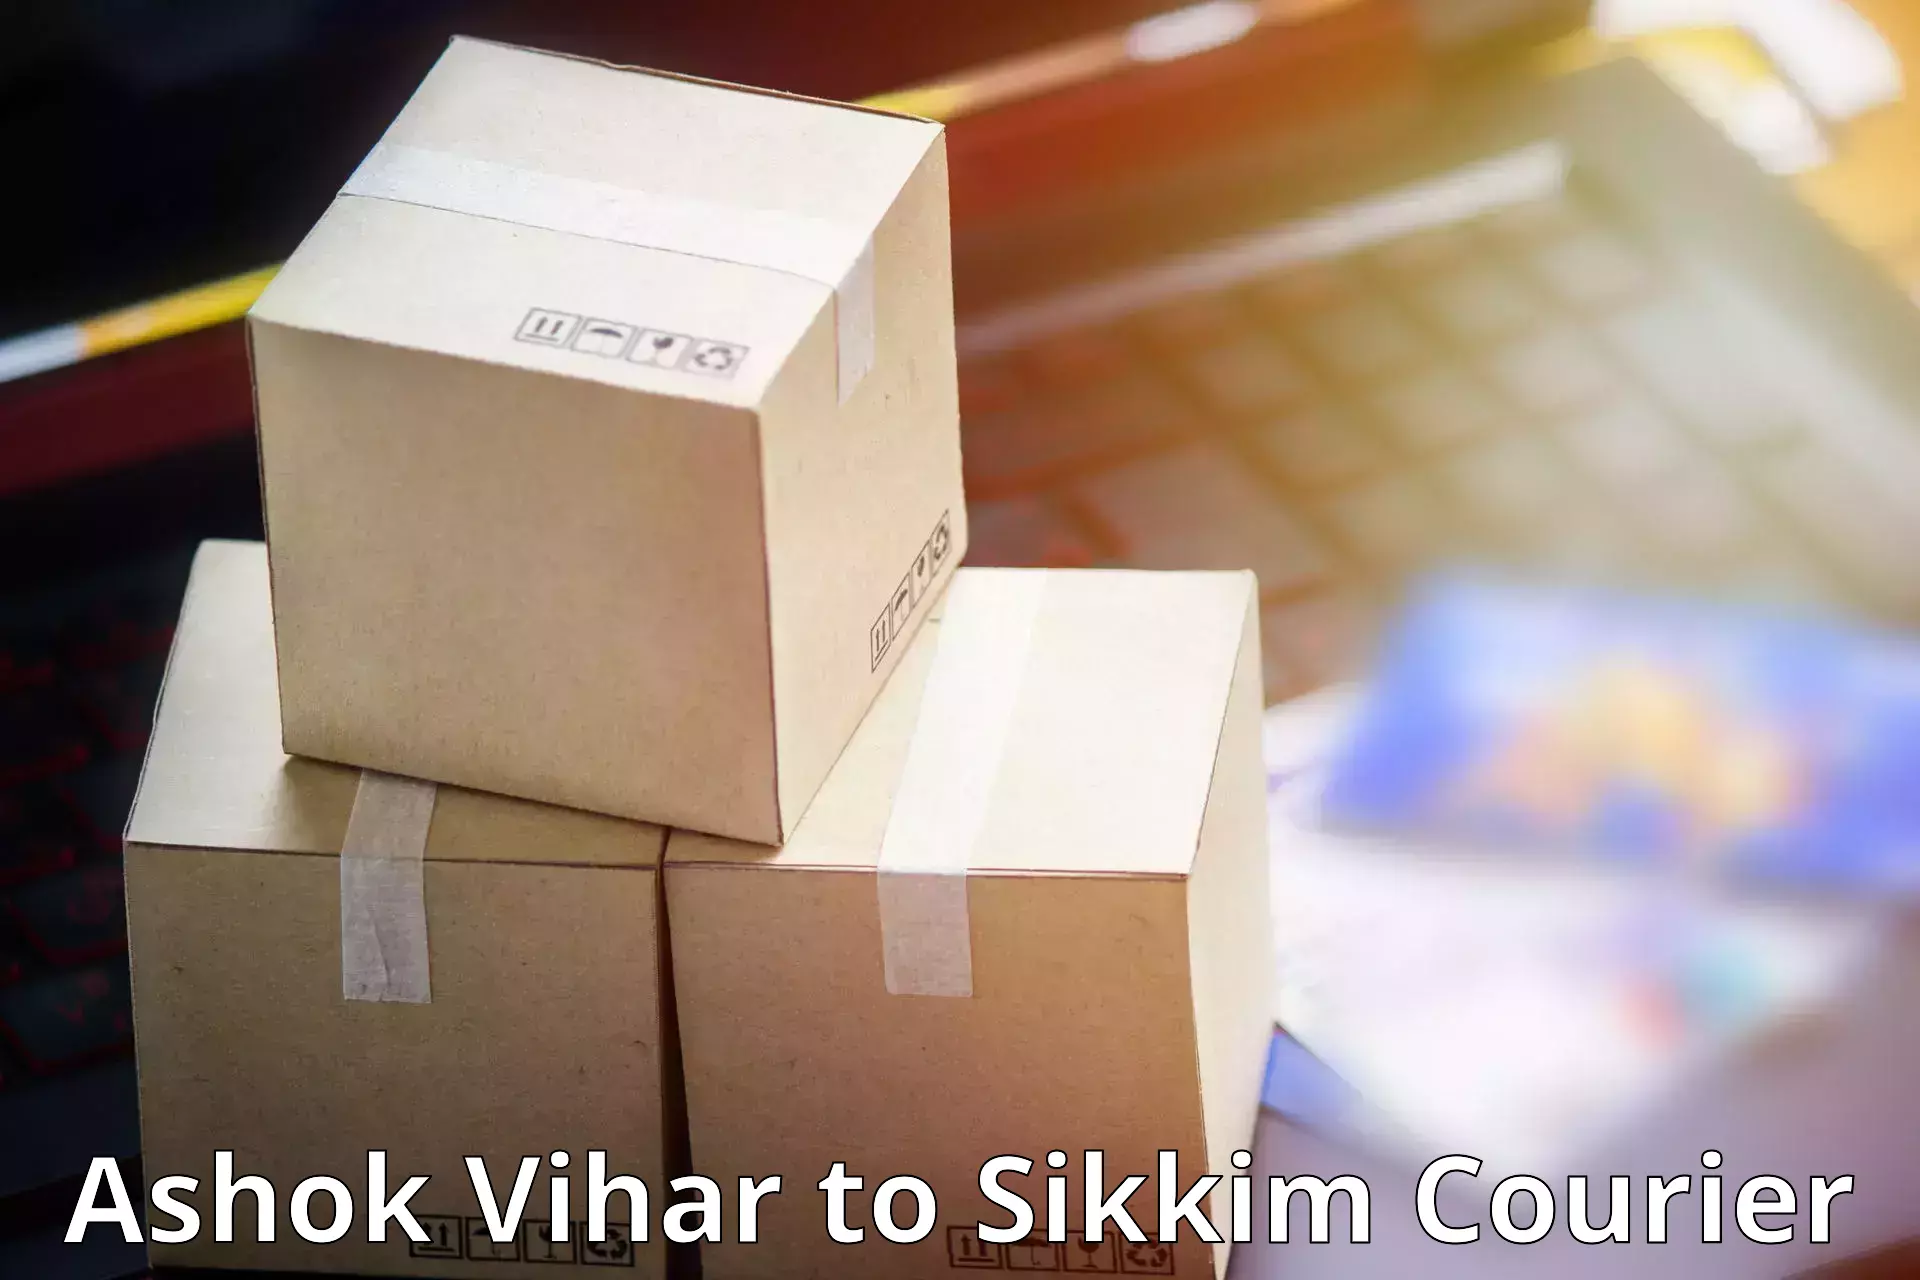 Affordable parcel service Ashok Vihar to Pelling